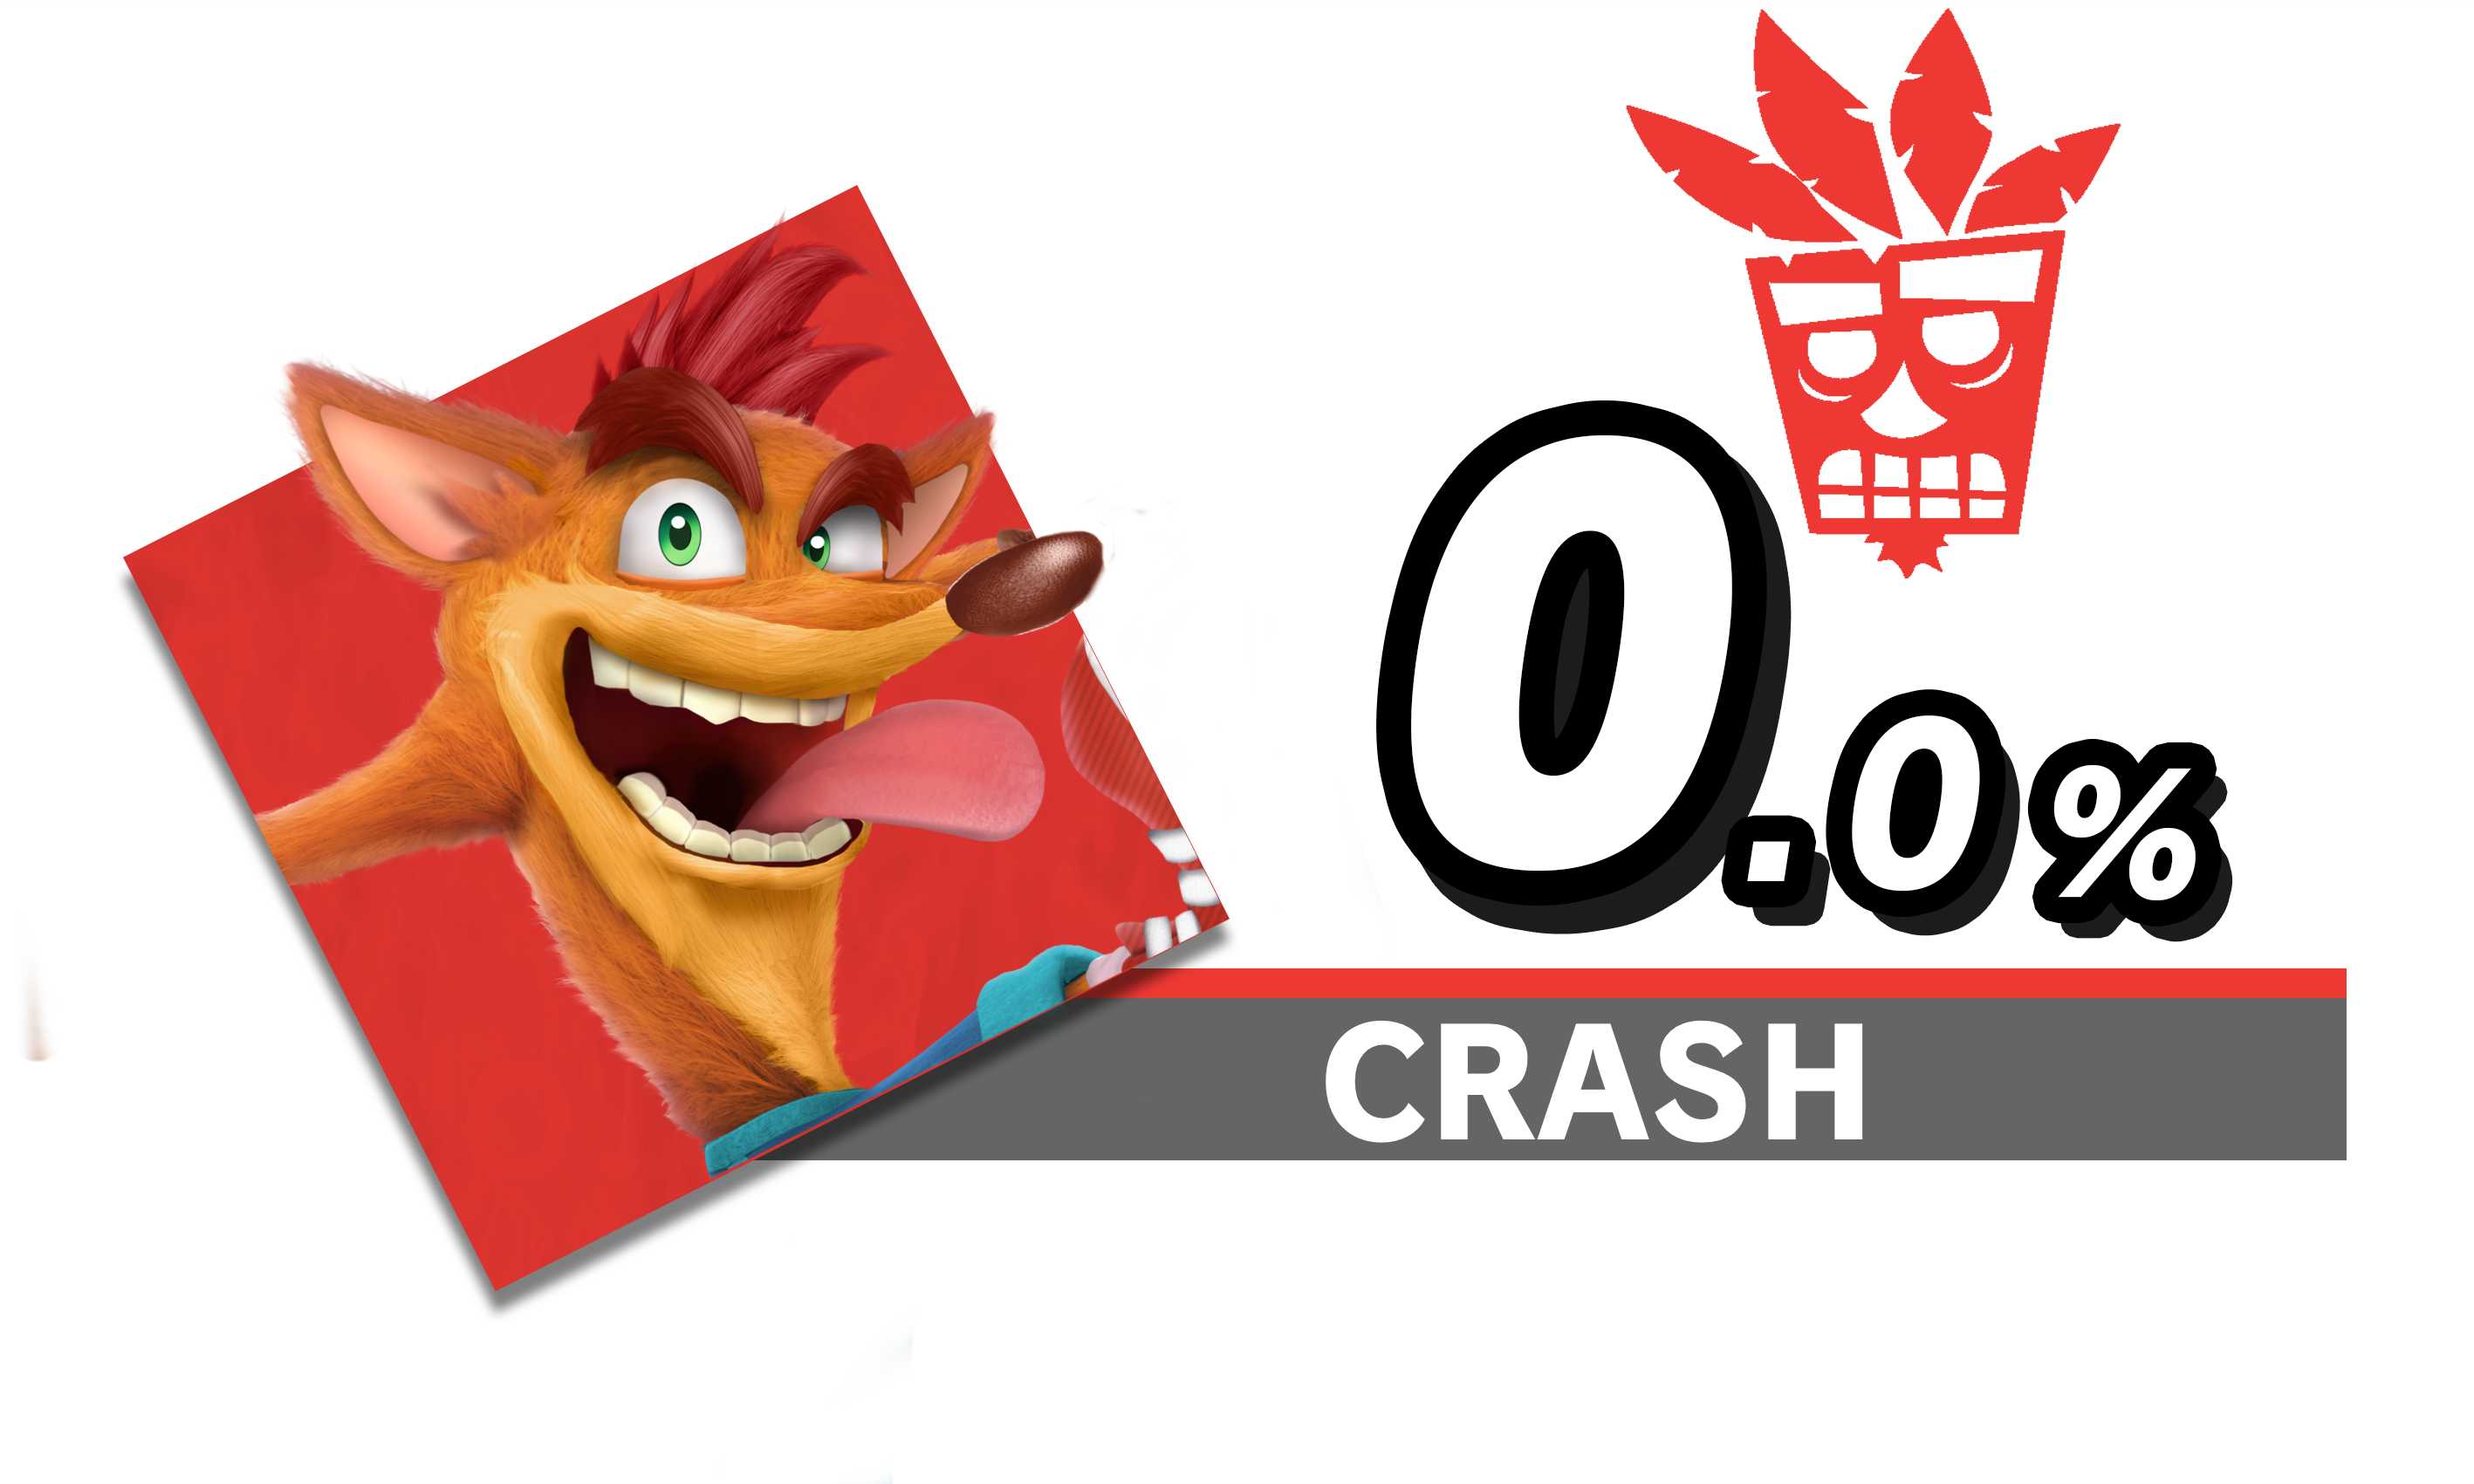 Smash Crash redesign by Lesausageperson on DeviantArt